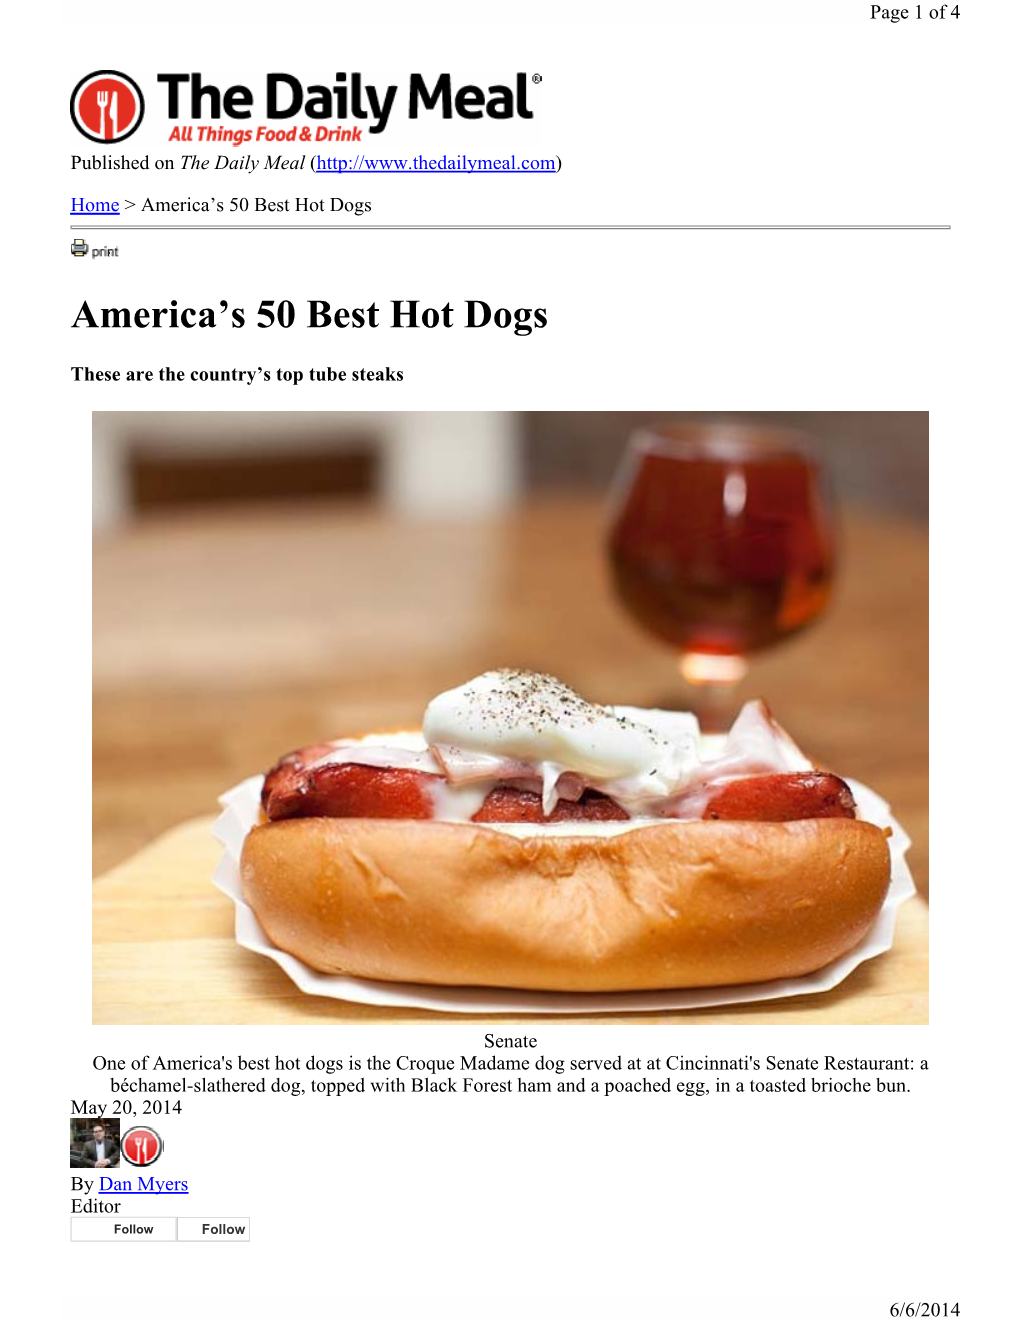 America's 50 Best Hot Dogs